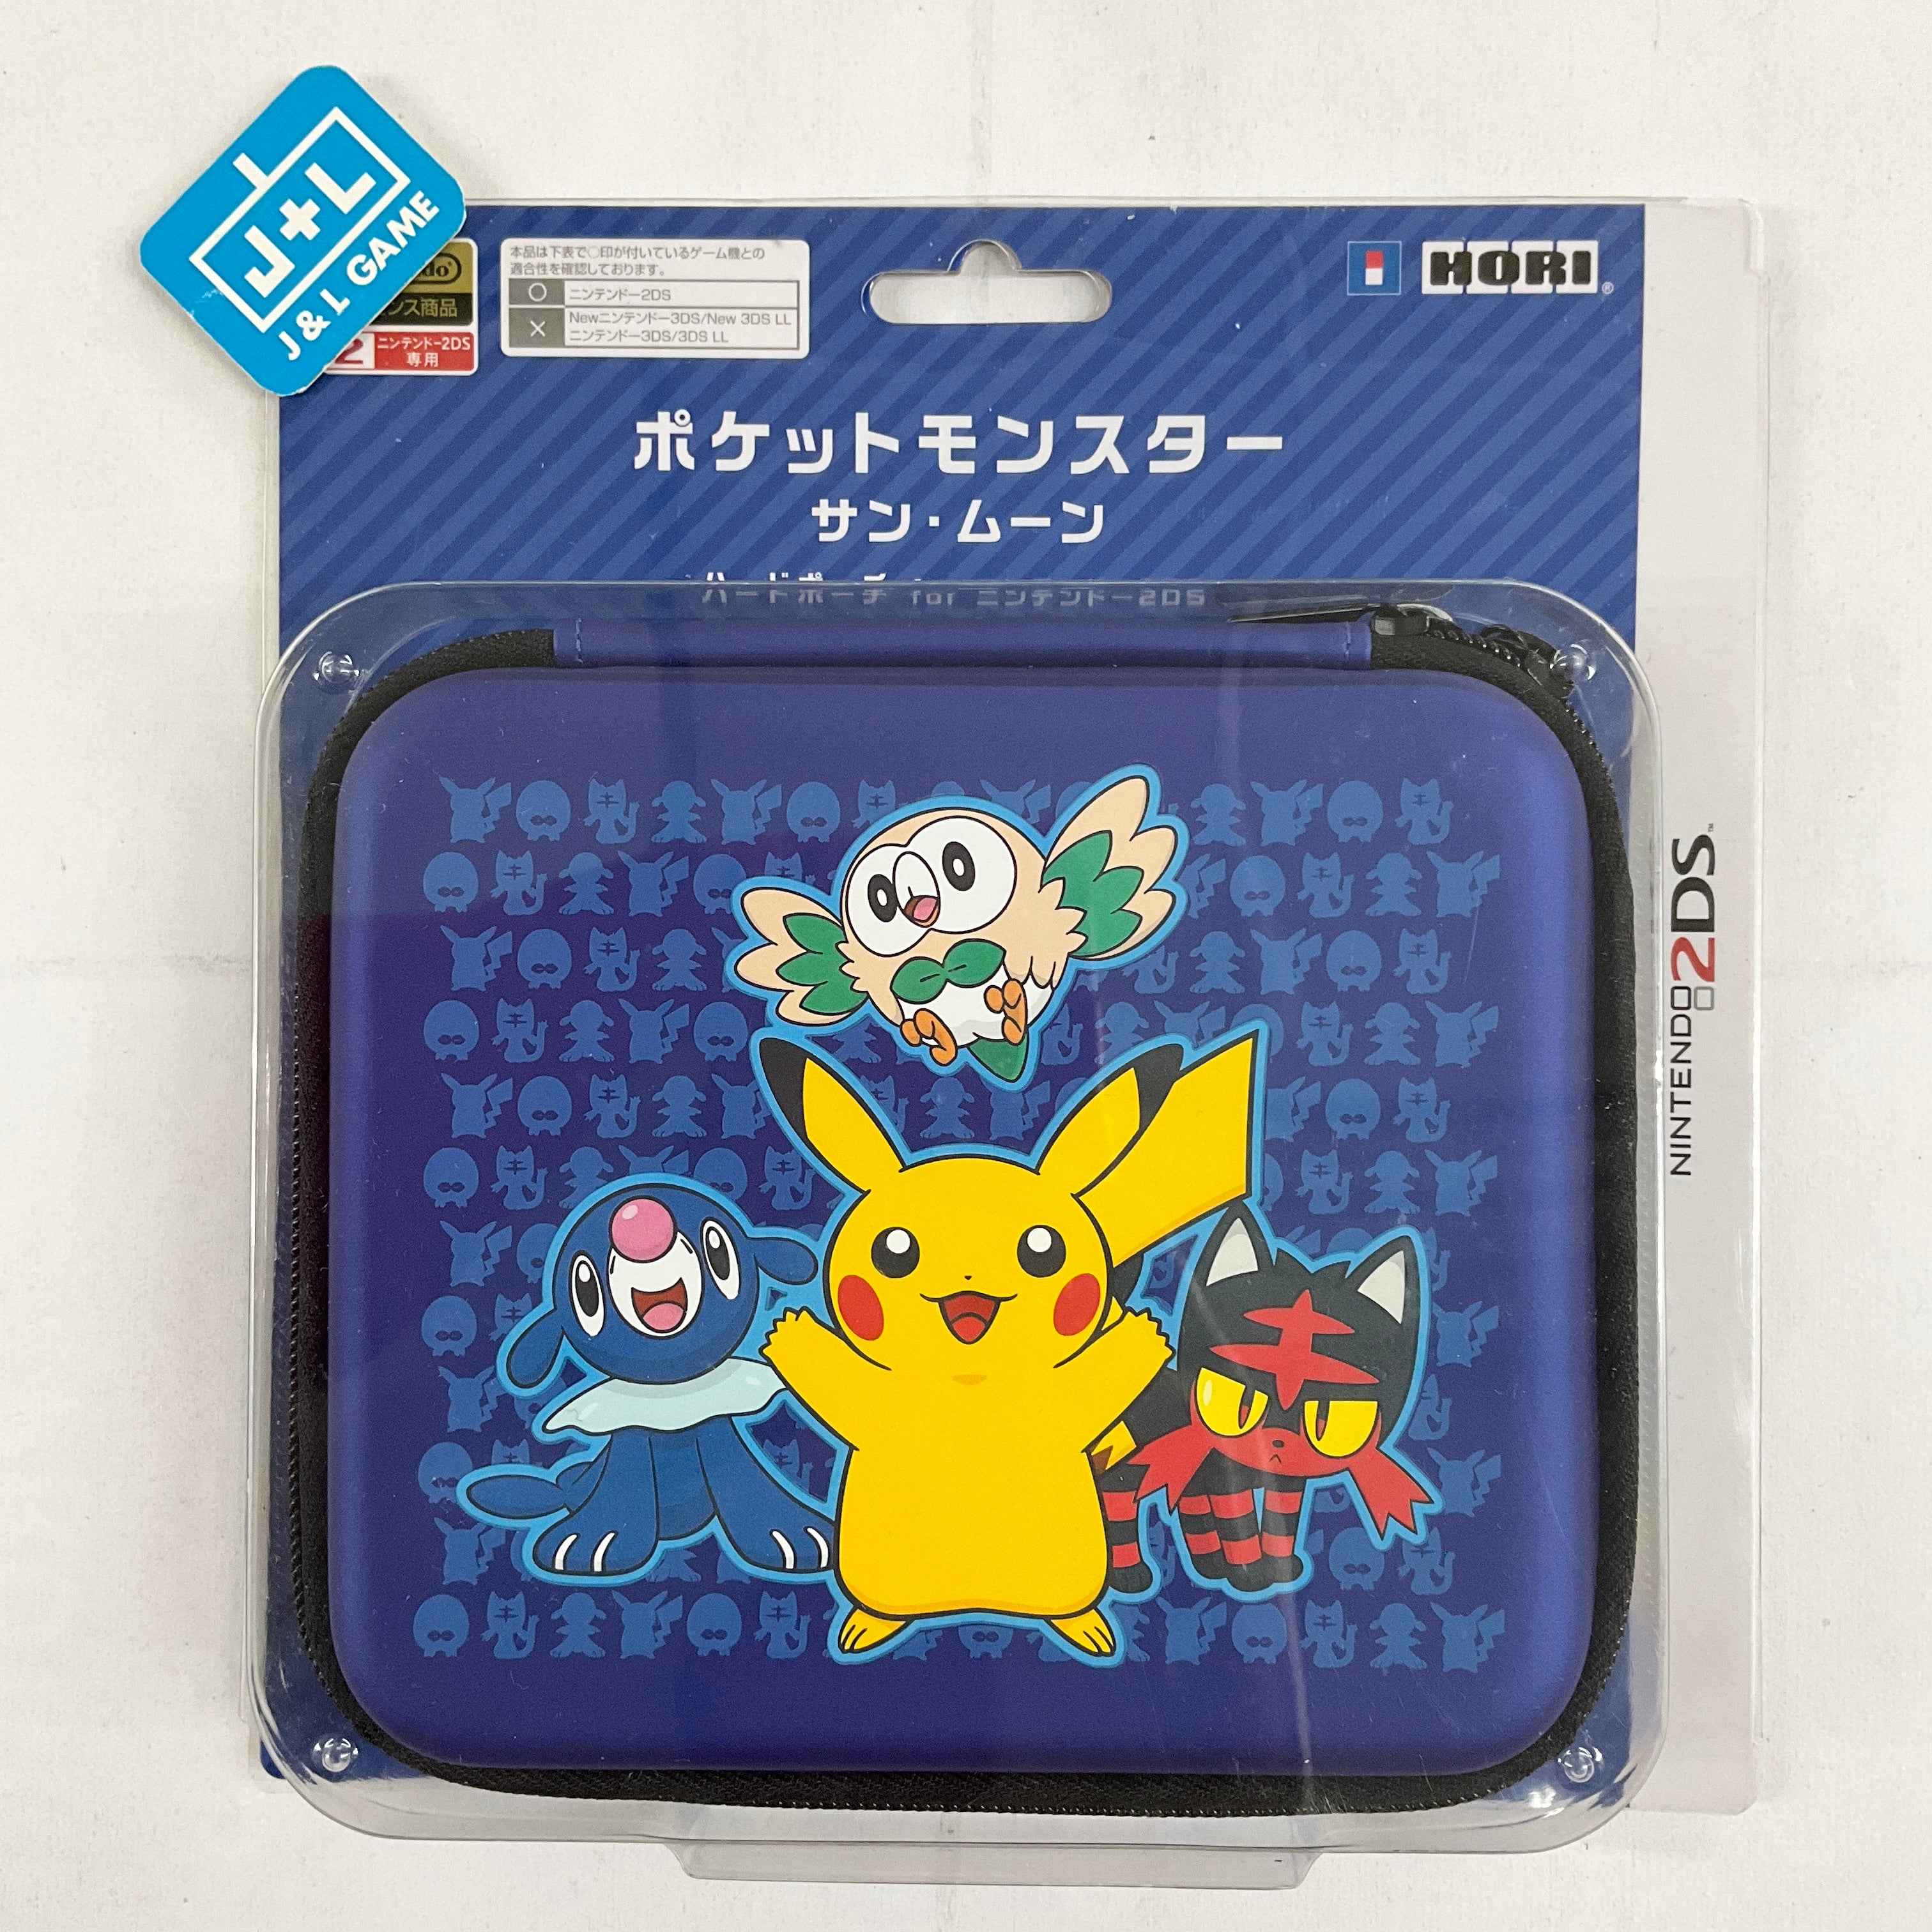 HORI Nintendo 2DS Hard Pouch (Pokemon Sun/Moon) - Nintendo 3DS (Japanese Import) Accessories HORI   